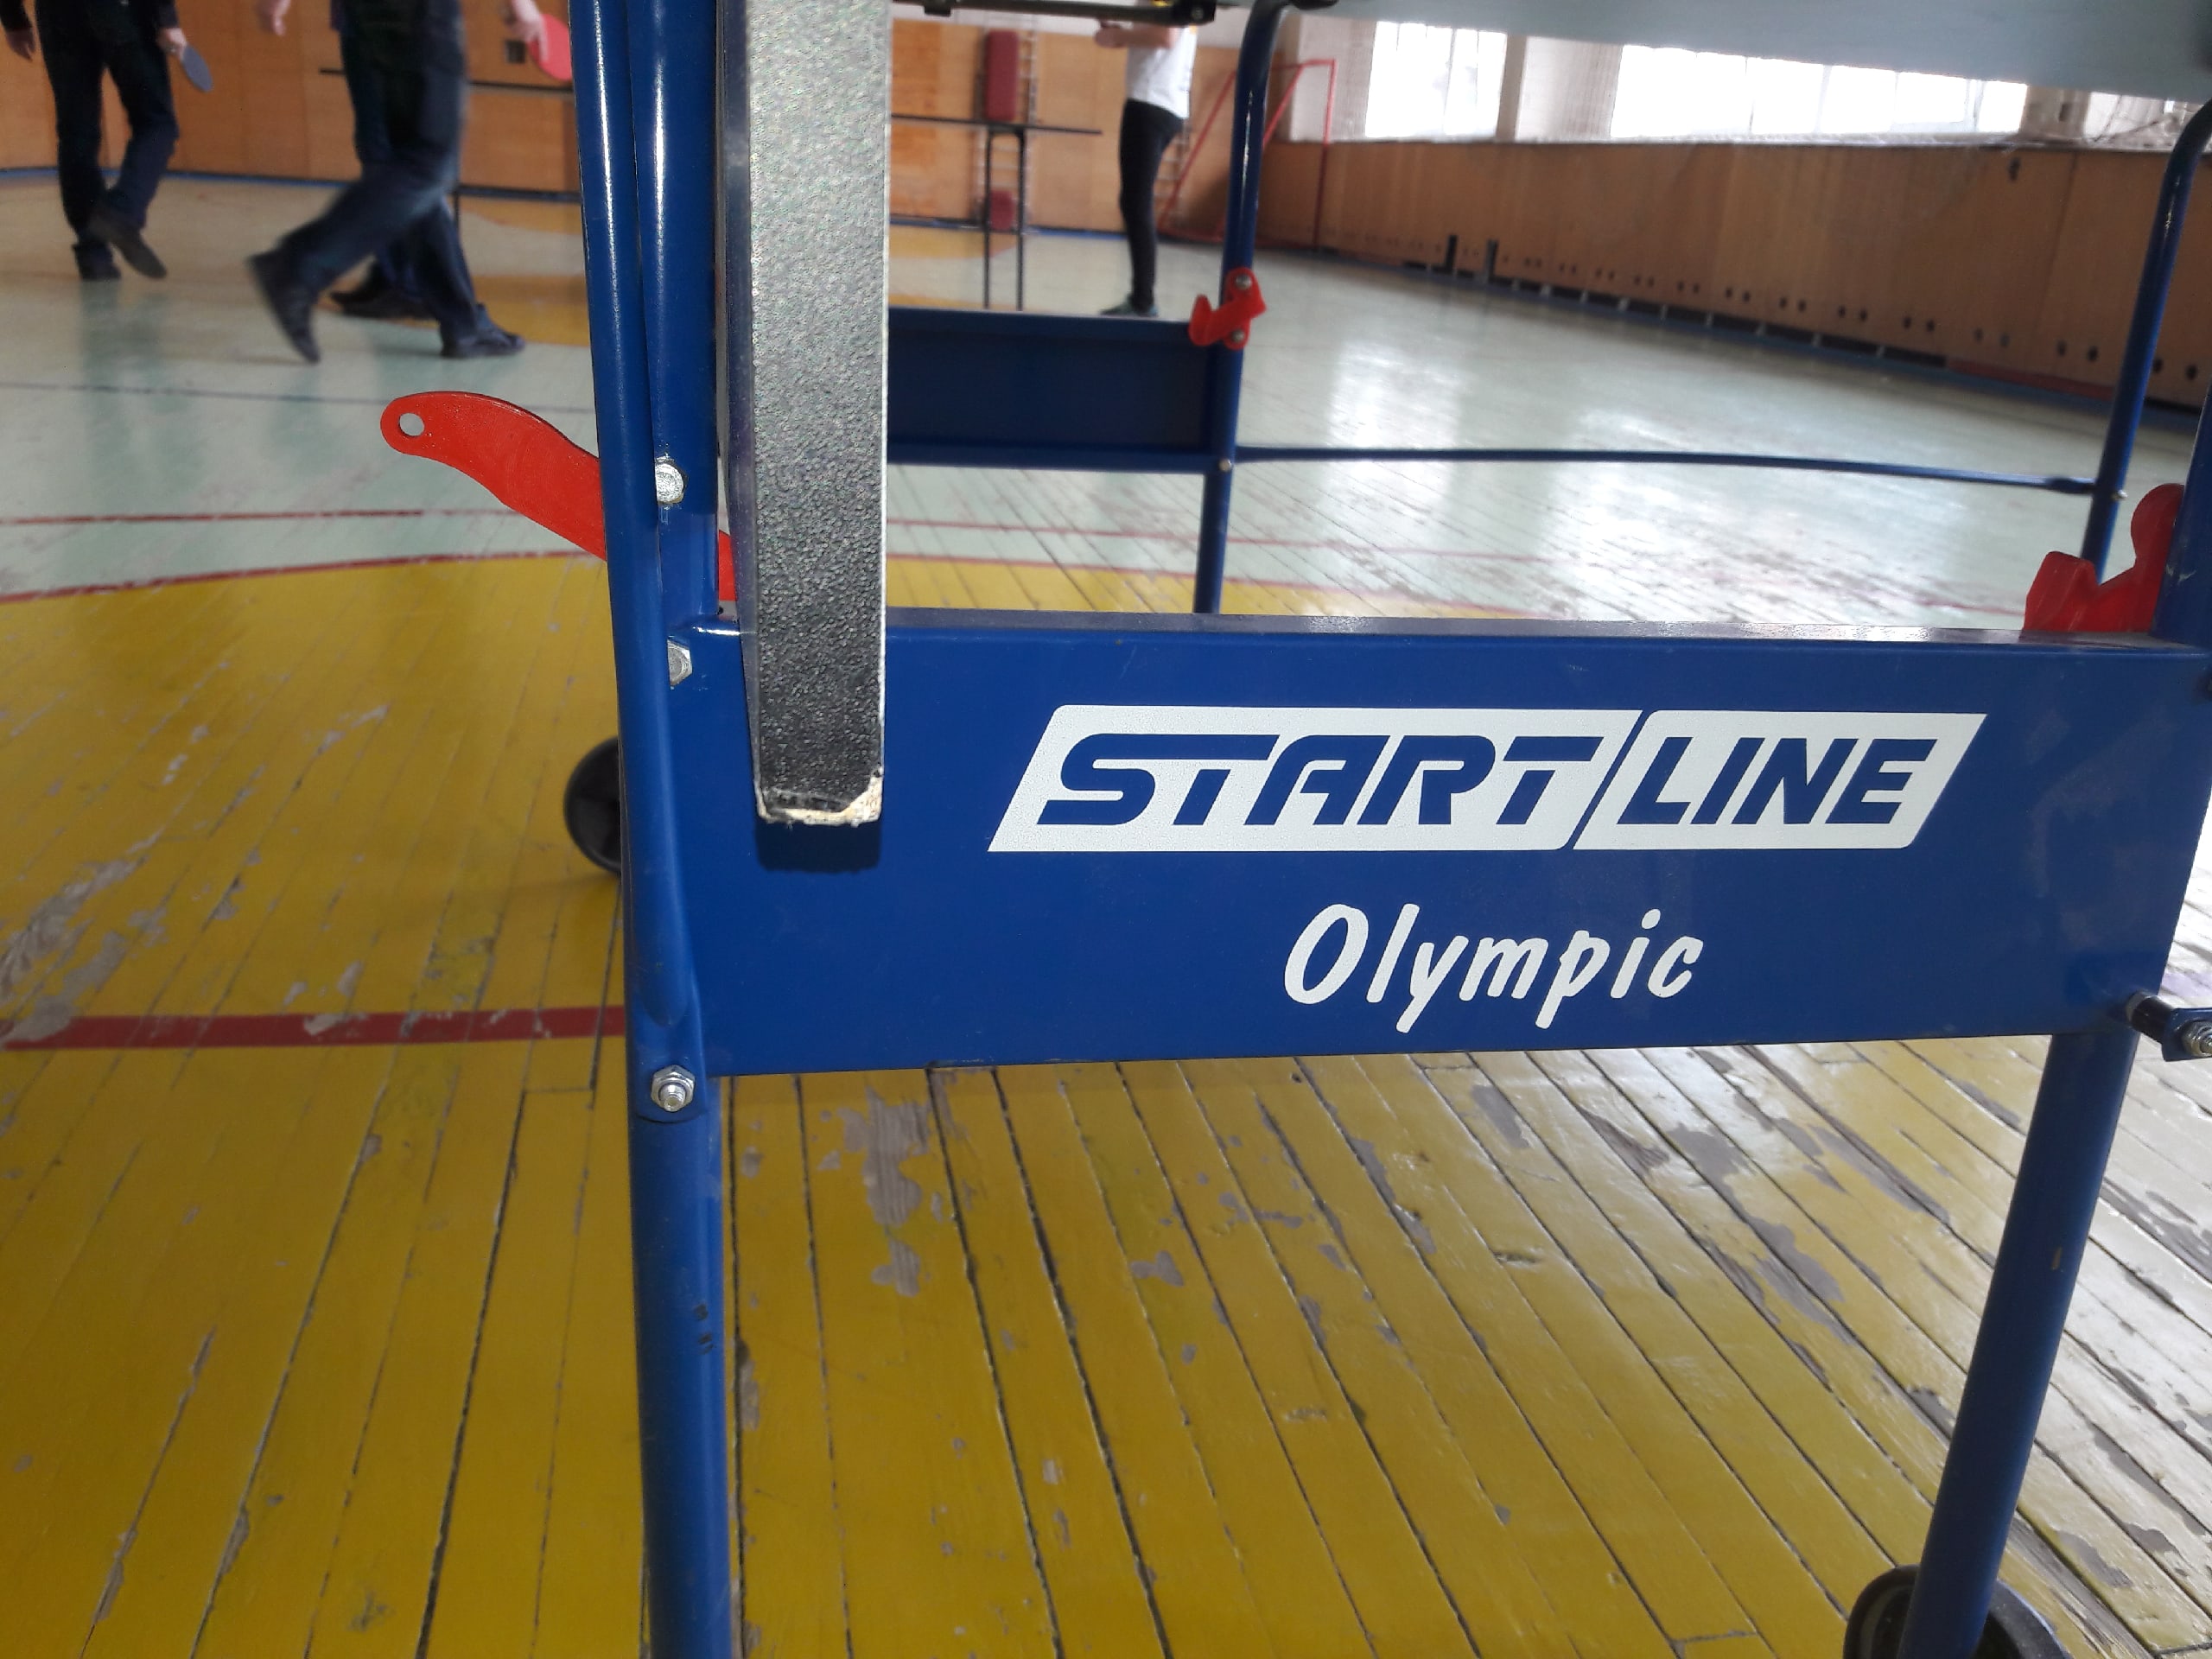 Теннисный стол start line olympic. Теннисный стол старт лайн Олимпик. Теннисный стол Star line Olimpic. STARLINE Olympic теннисный стол.